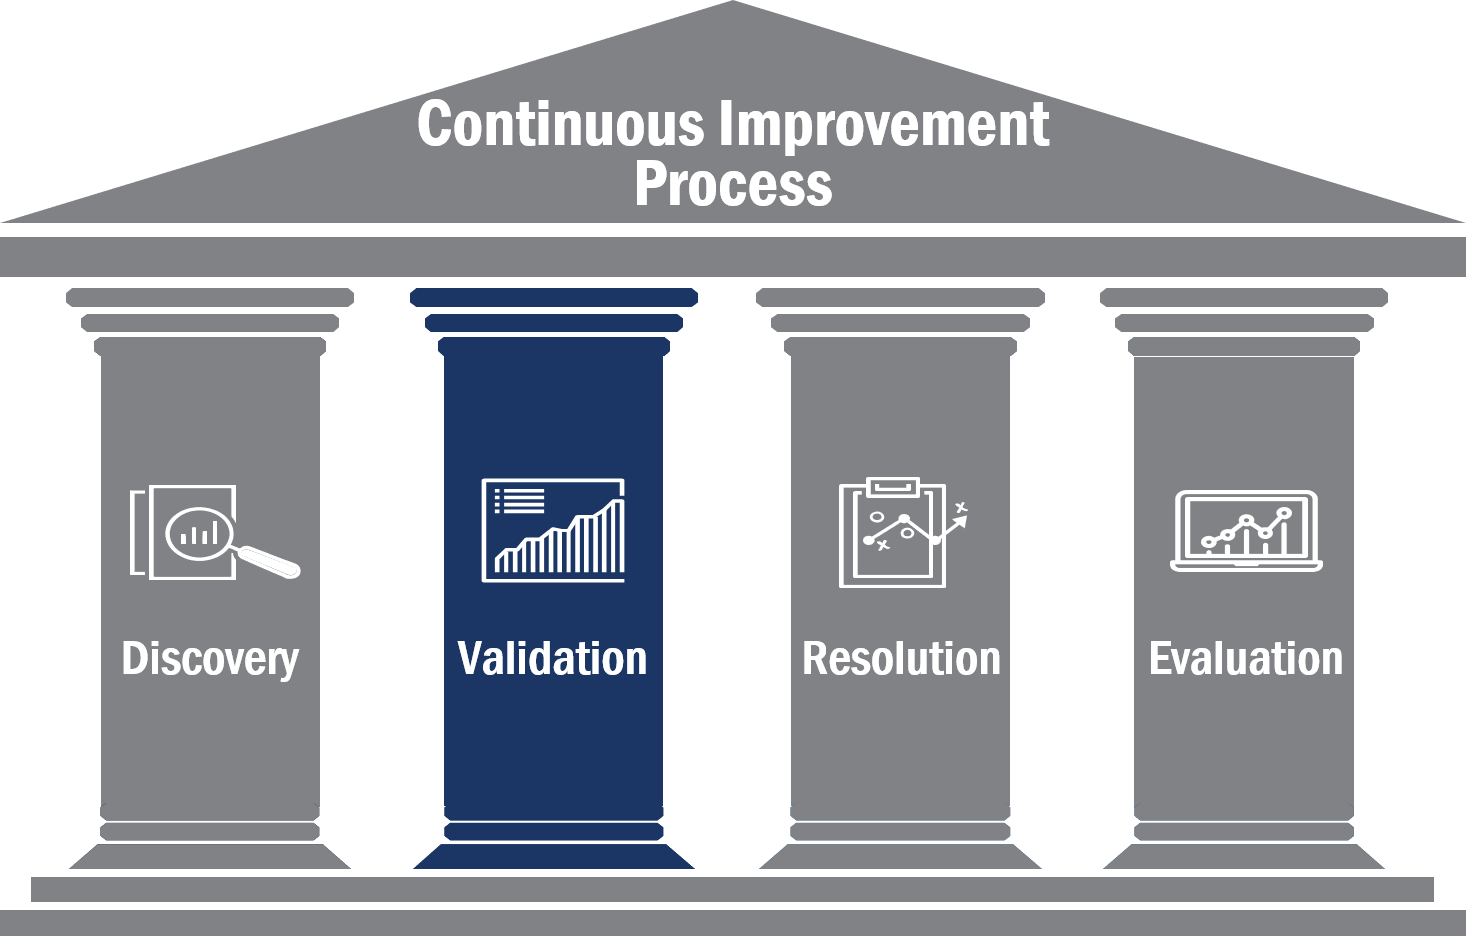 Continuous Improvement Process: Validation